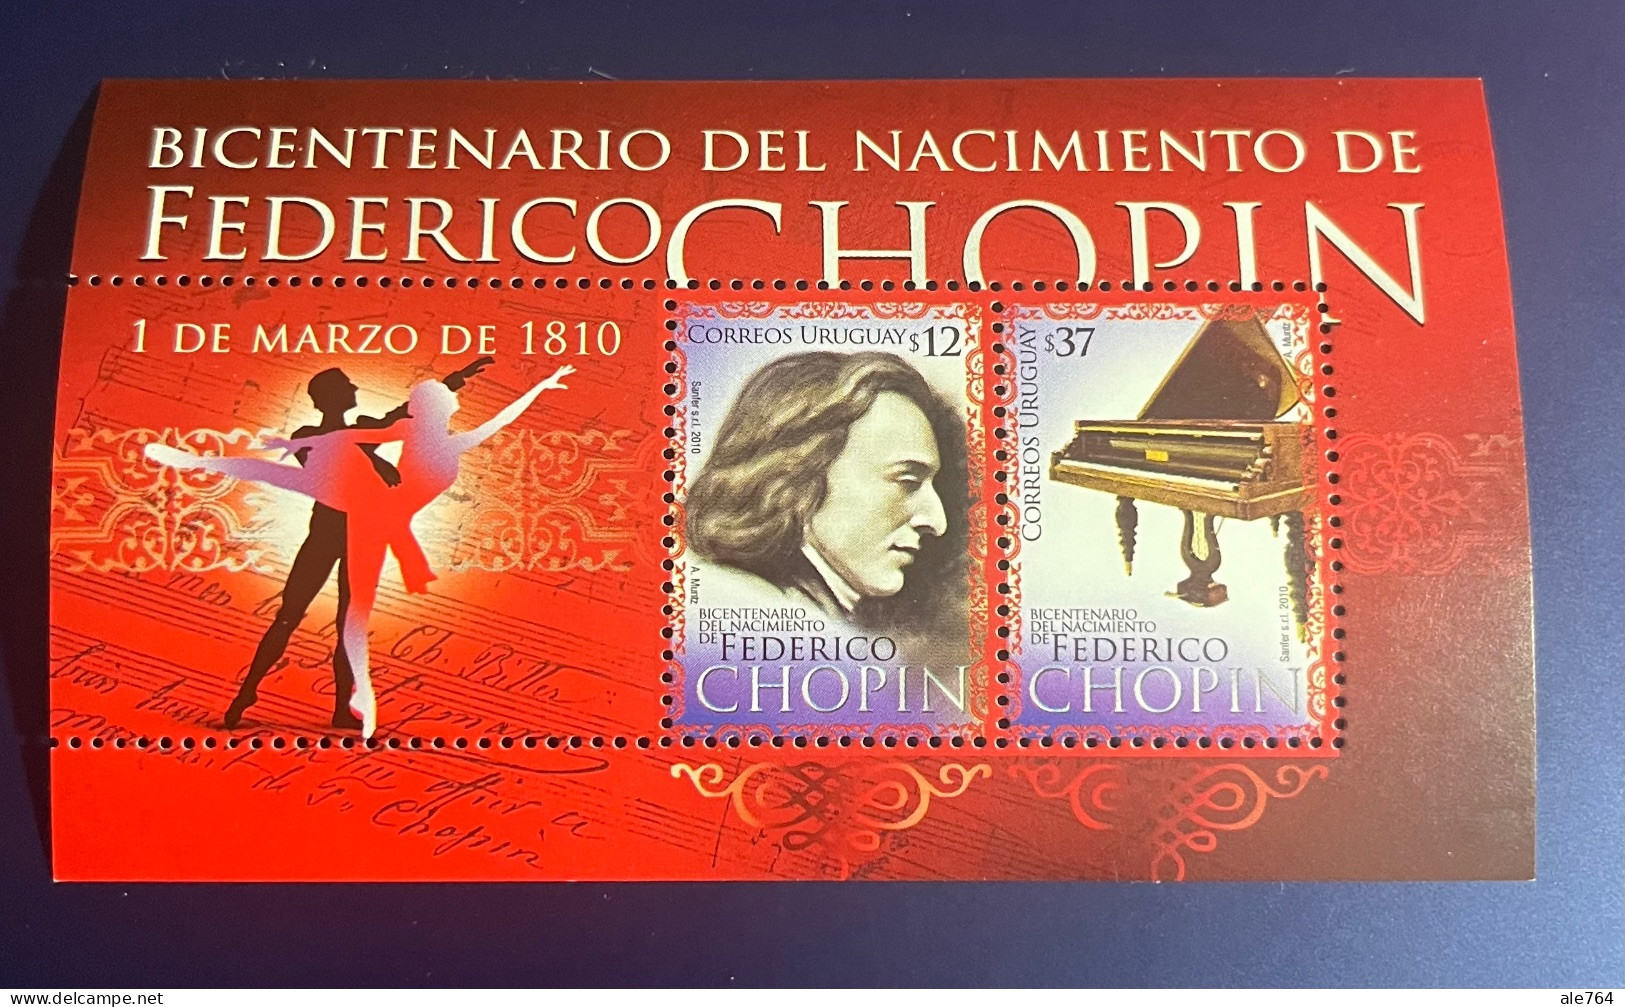 Uruguay 2010, Federic Chopin, Compositor, Sheet, Sc 2298, MNH. - Uruguay